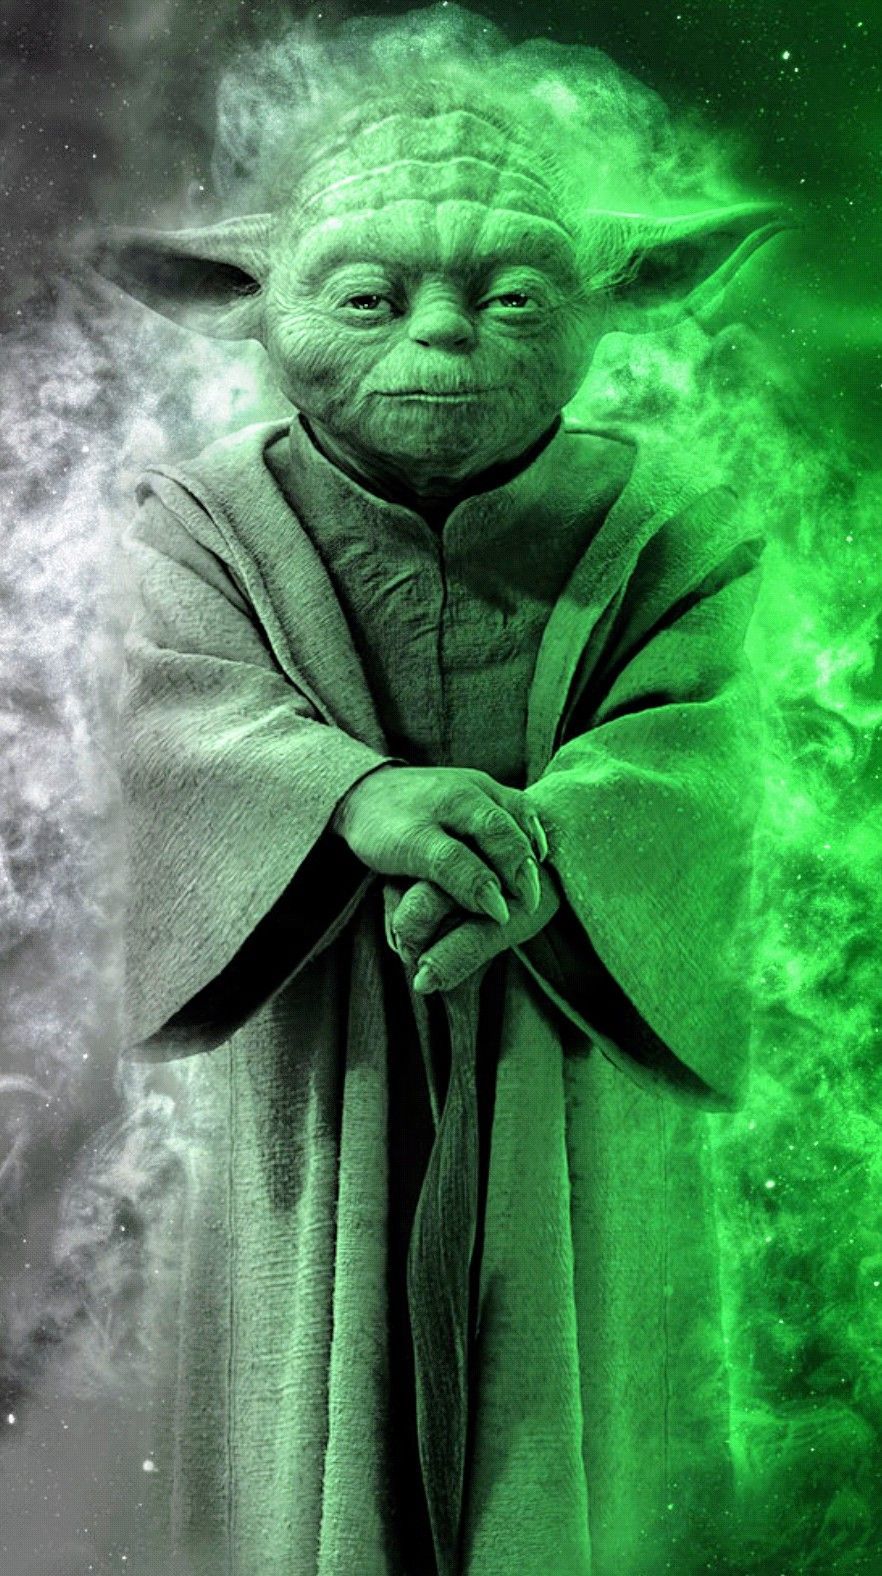 Cool looking artwork of Jedi Master Yoda. #starwars #yoda